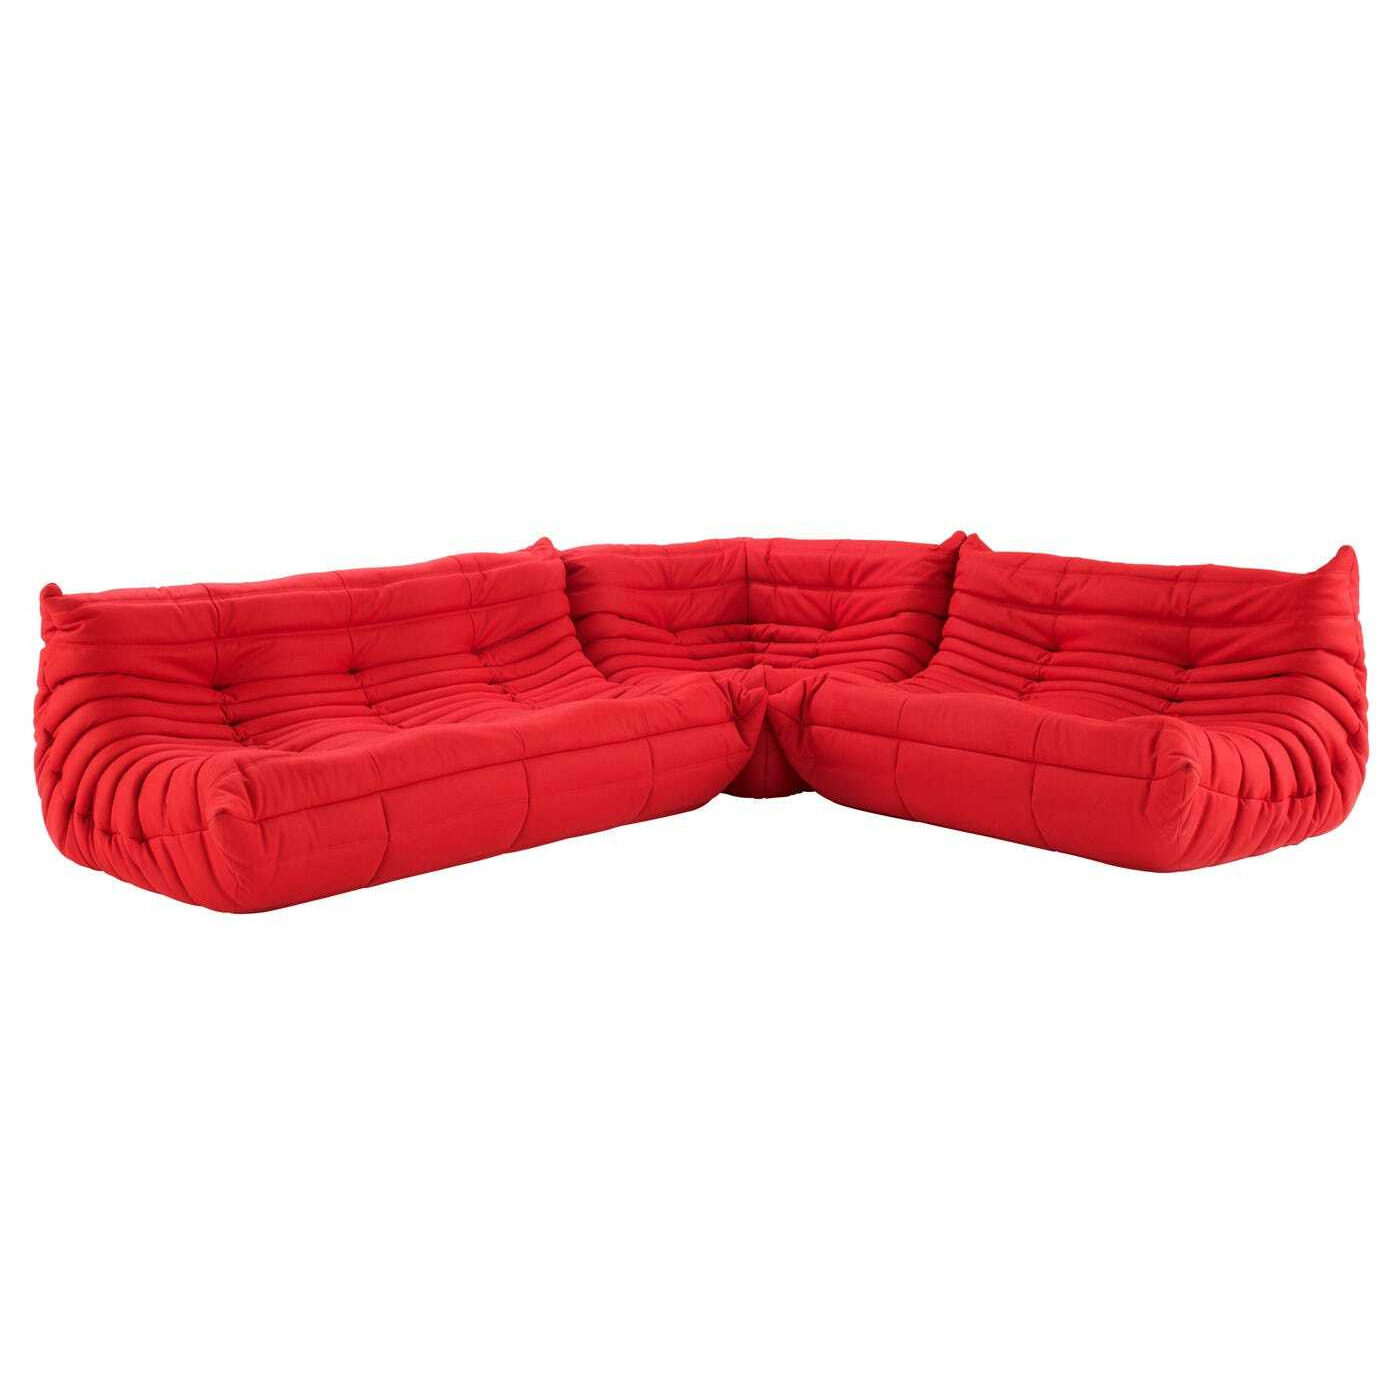 Ligne Roset Togo Modular Corner Alcantara Goya Red - Heal's UK Furniture - image 1